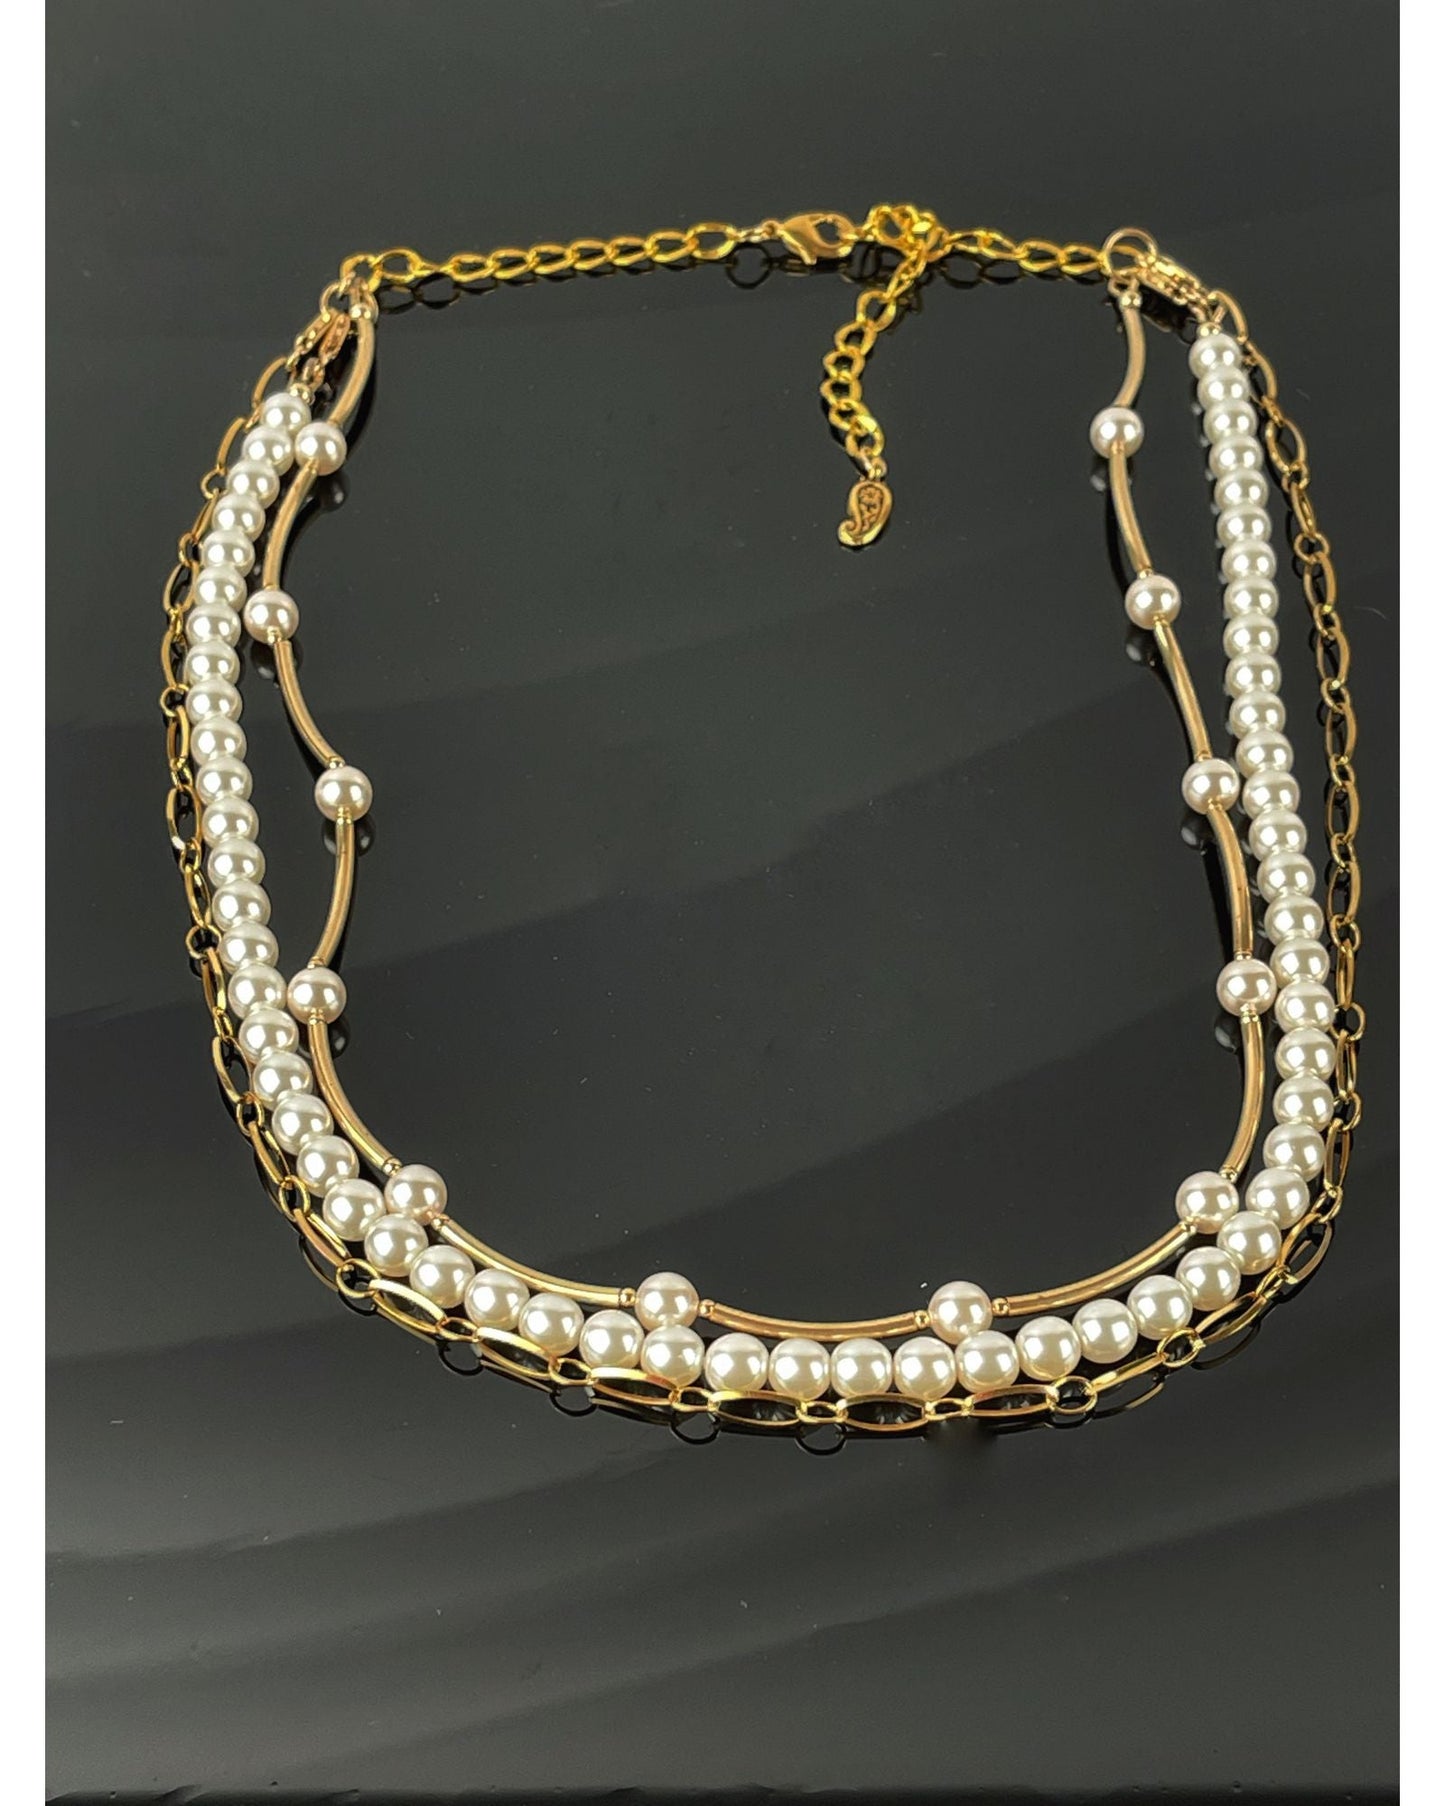 Cassia Pearl Necklace-Multi-strand Pearl Necklace-14k Gold Necklace-Austrian Pearl Necklace-Carabella By Cheryl